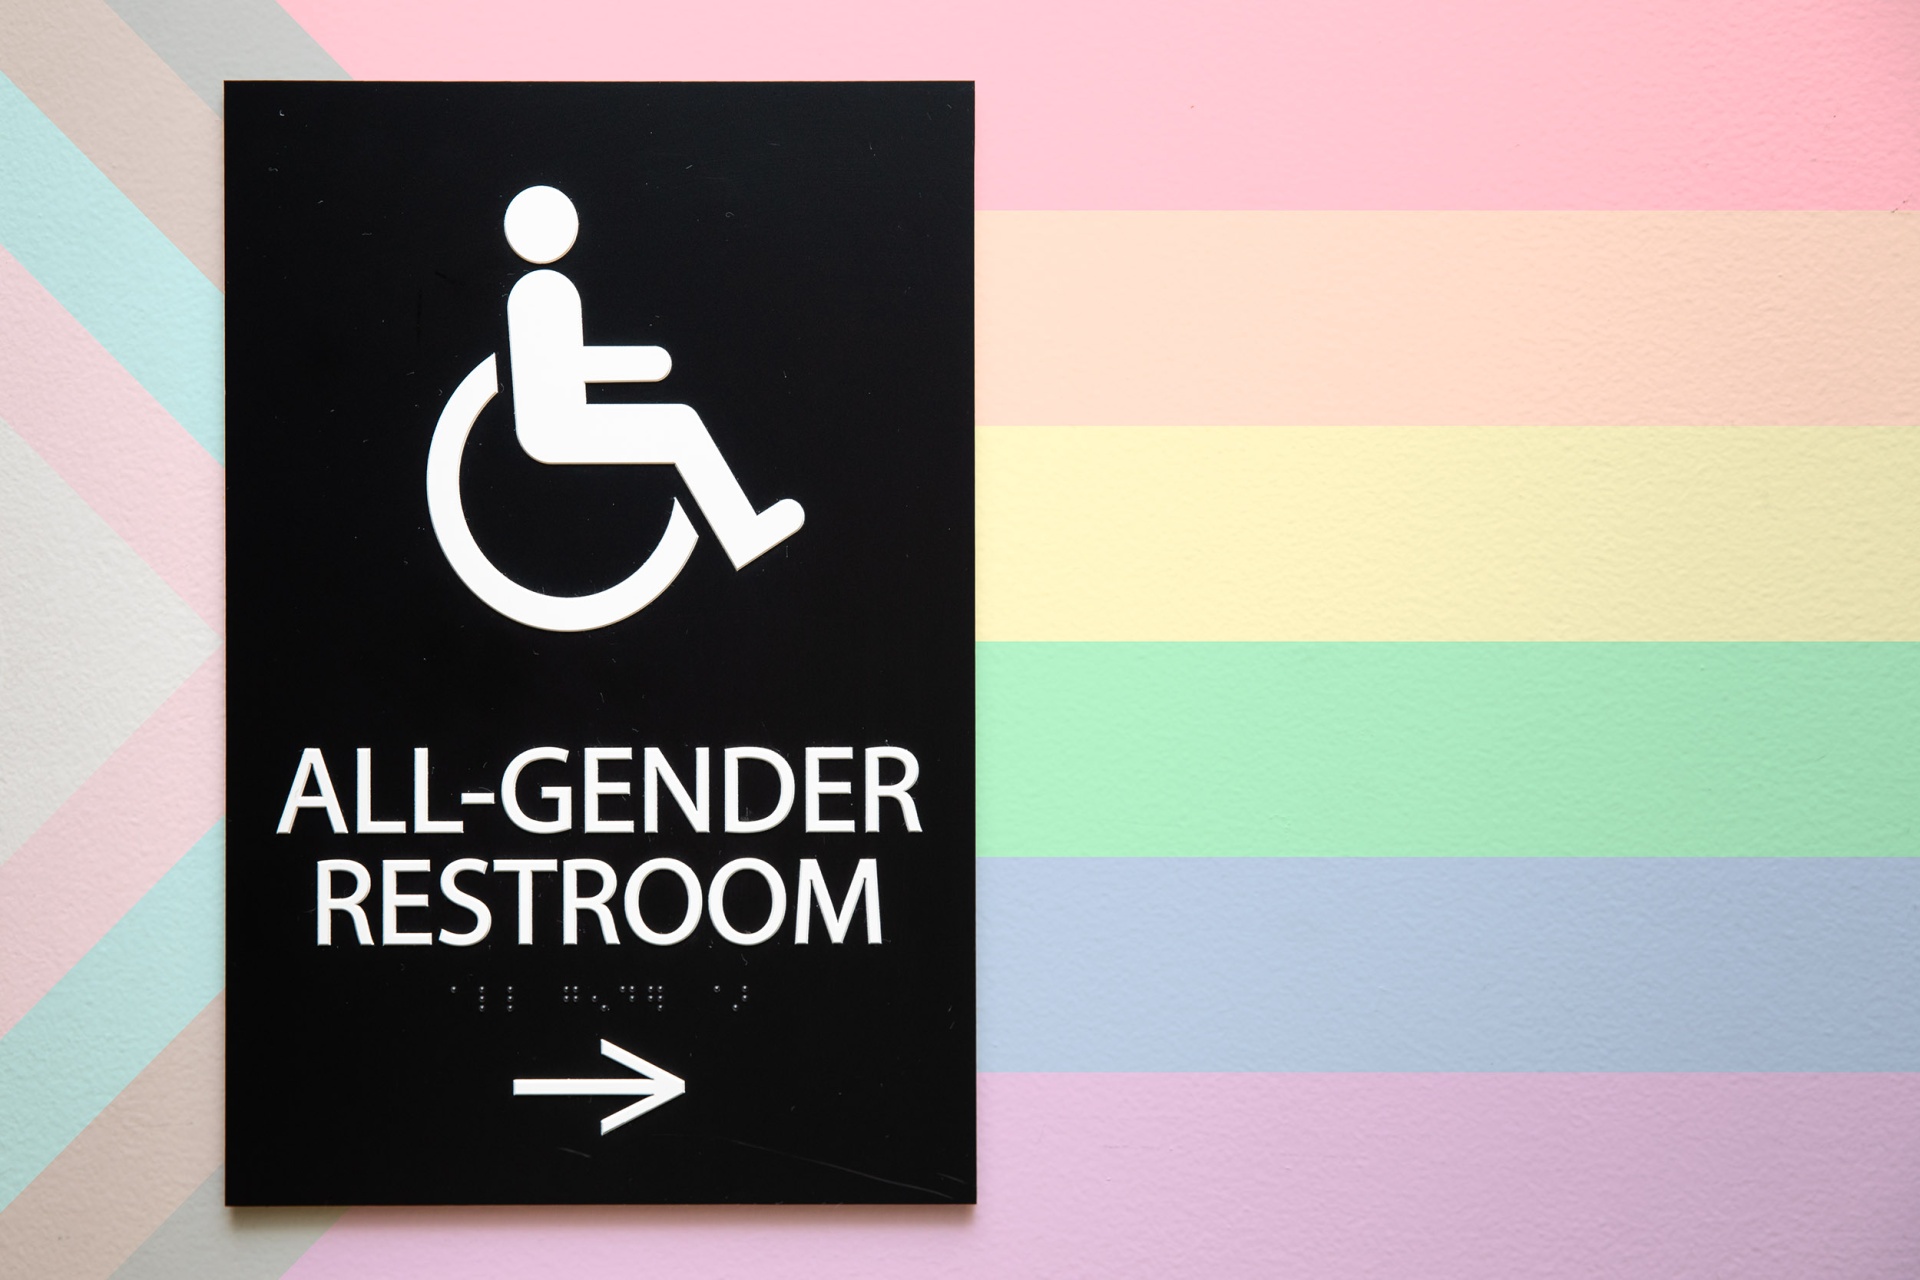 All Gender bathroom sign on rainbow background